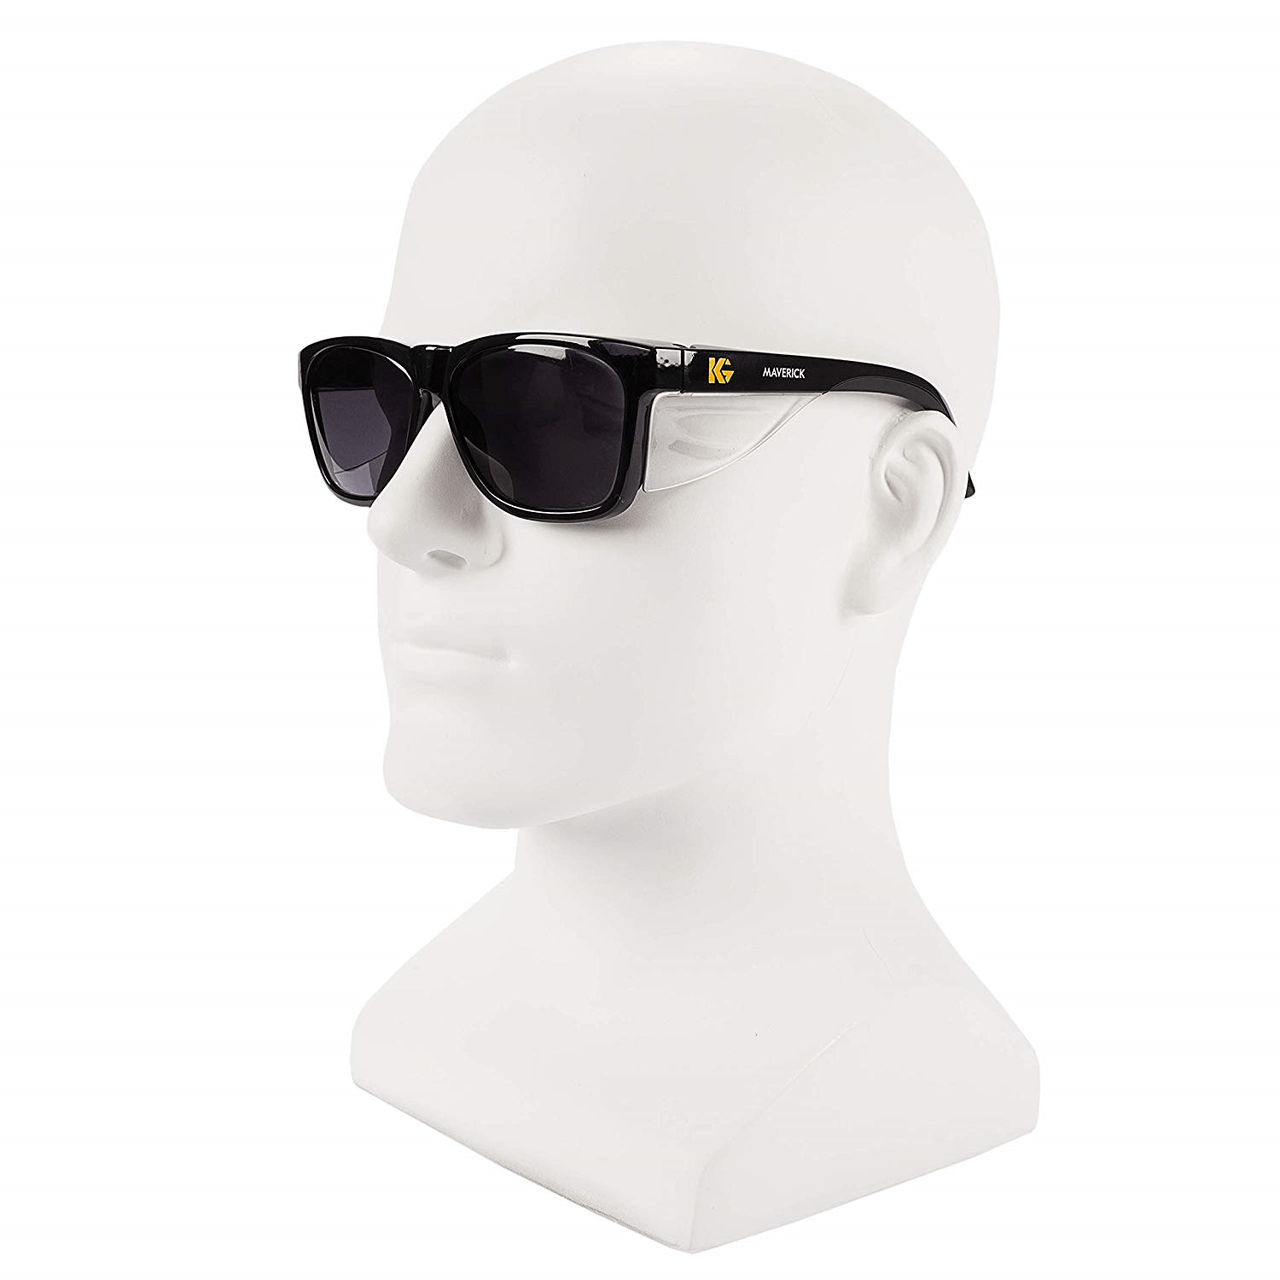 KleenGuard Maverick Safety Glasses with Black Frame and Gray Anti-Fog Lens Worn on model